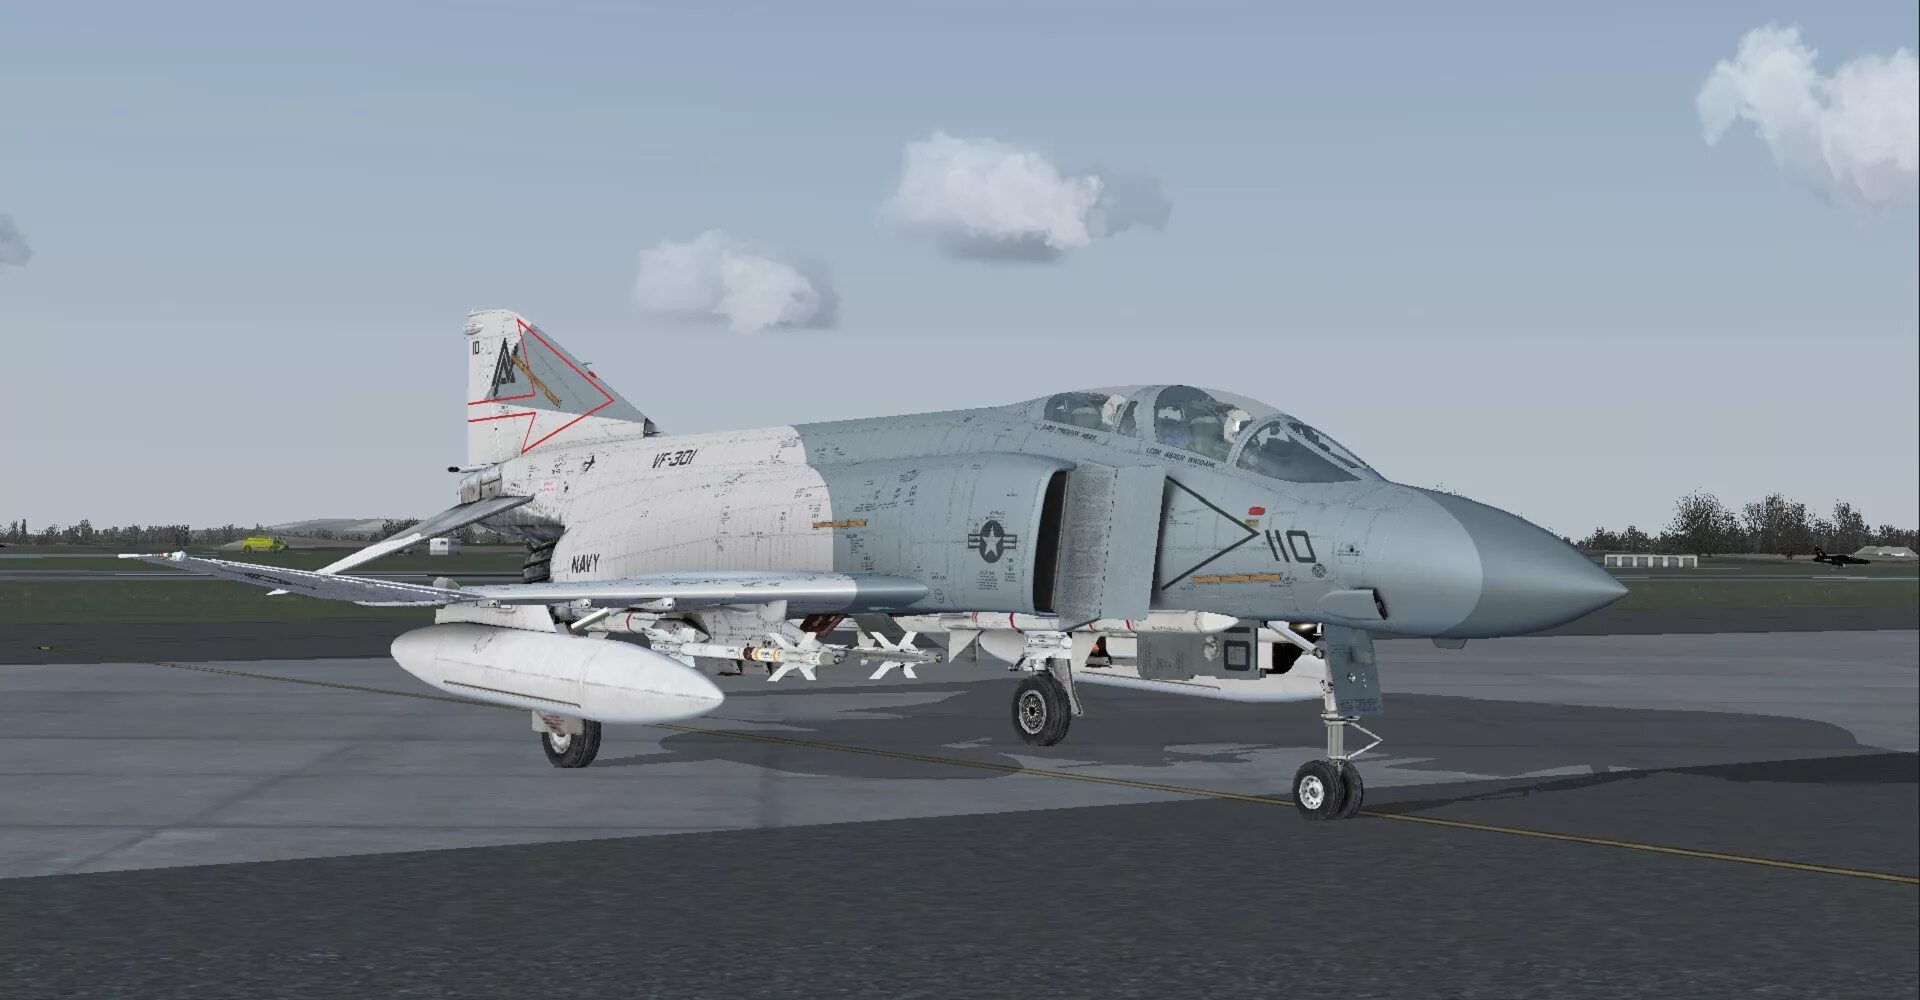 F 4.0 5.6. F4e Phantom. F-4s Phantom II. Ф-4 Фантом в камуфляже. Ф17 Фантом.